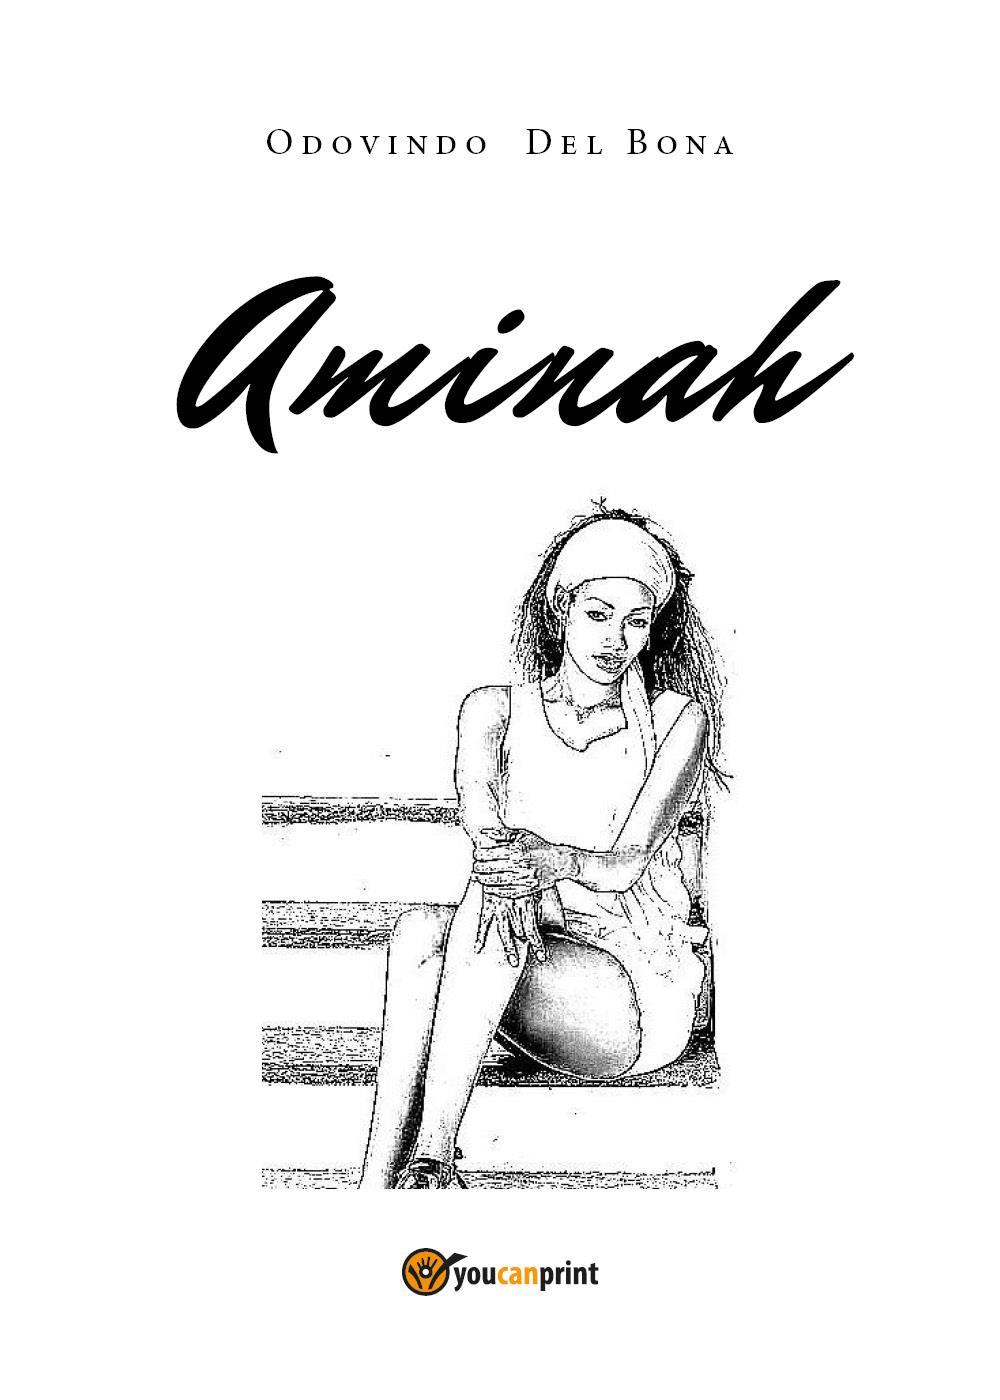 Aminah